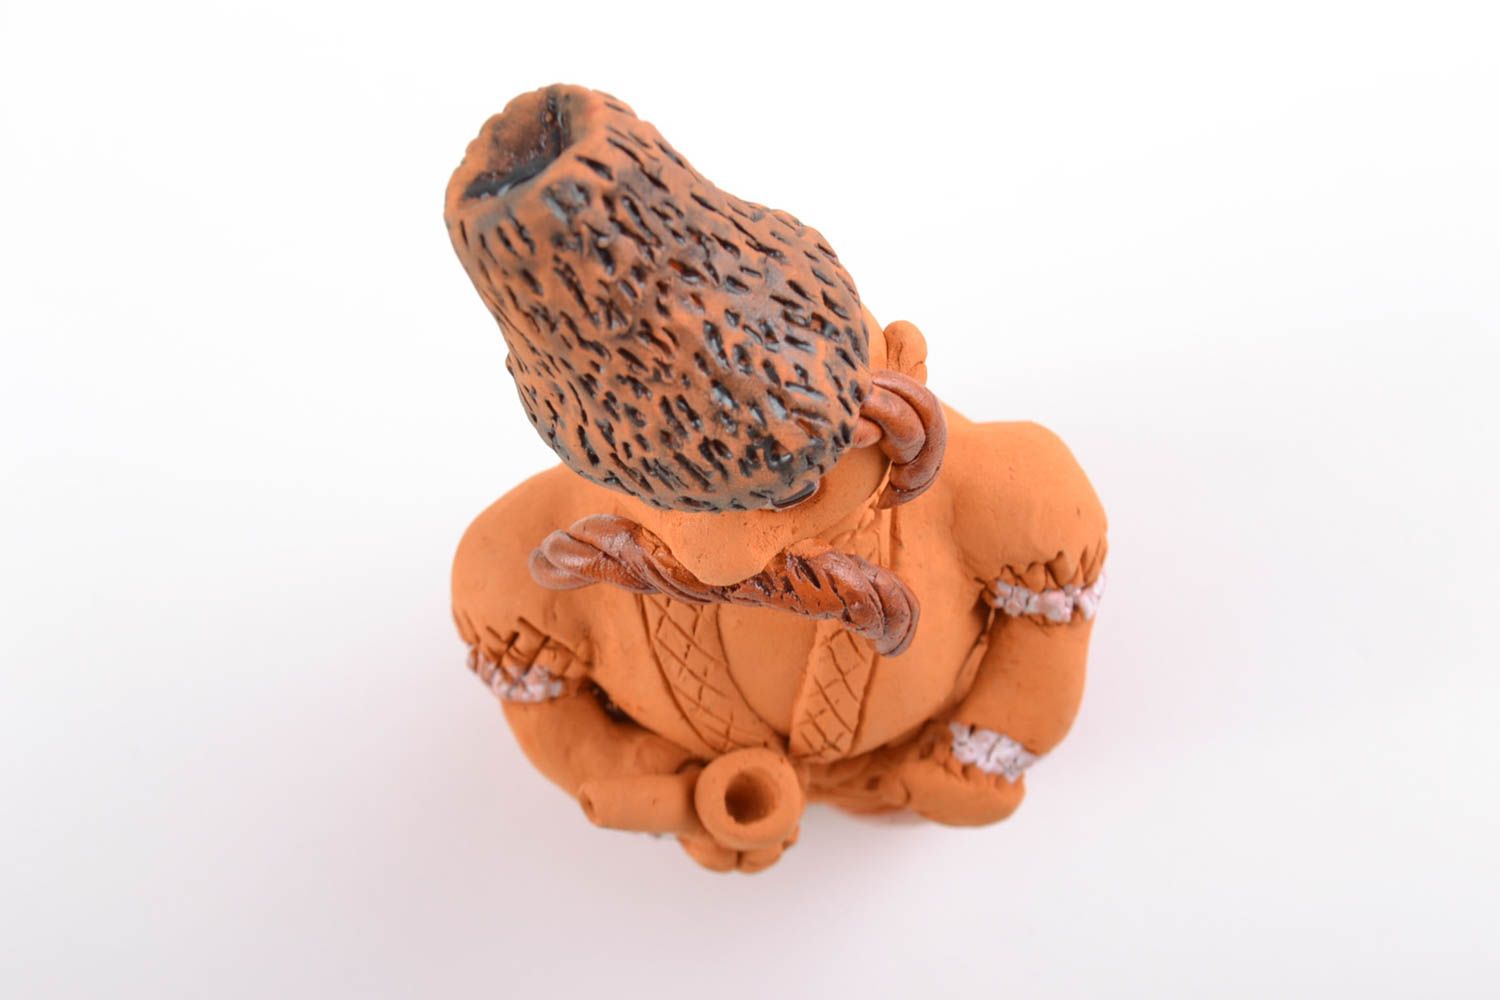 Statuina in ceramica fatta a mano figurina decorativa souvenir di argilla foto 5